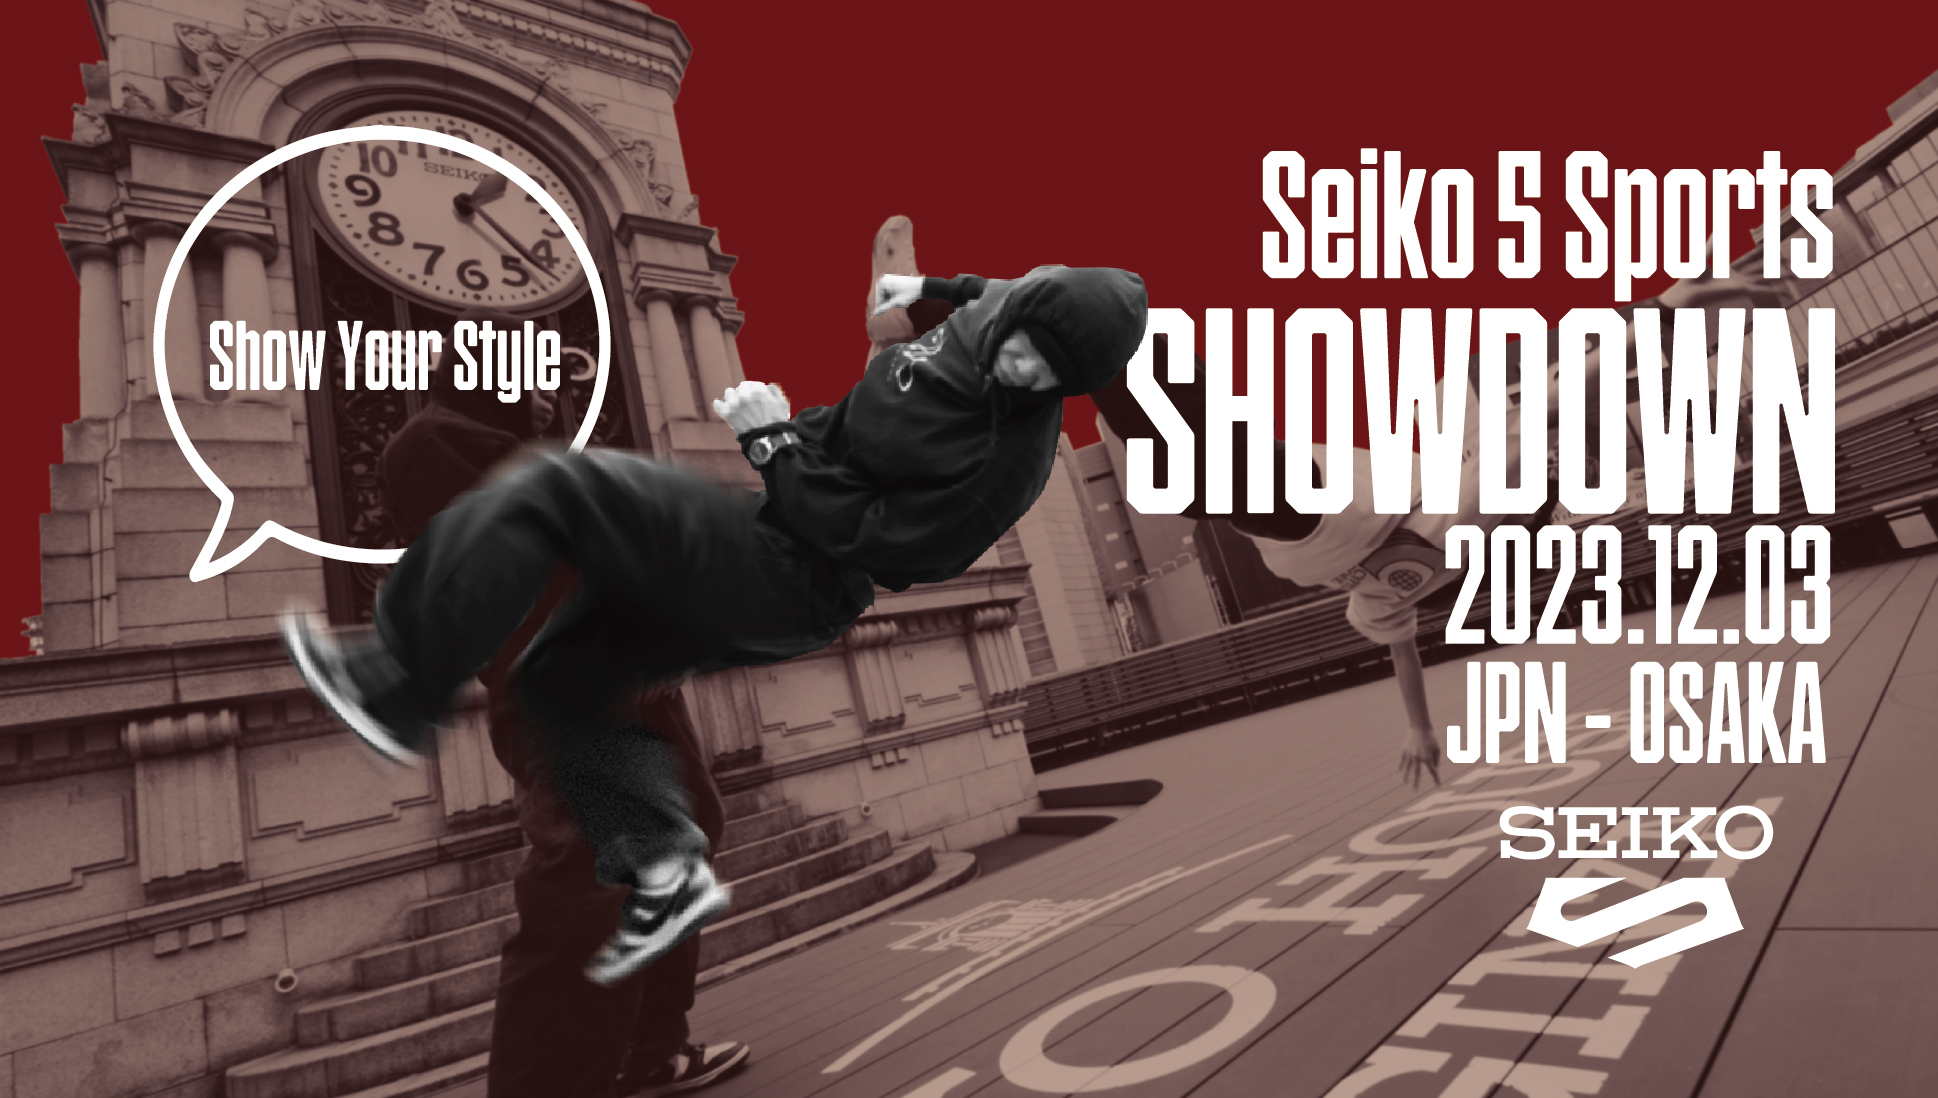 SEIKO SPORTS セイコーファイブスポーツ SBSA203 腕時計 メンズ メカニカル Field Spo ts Style  メンズ腕時計